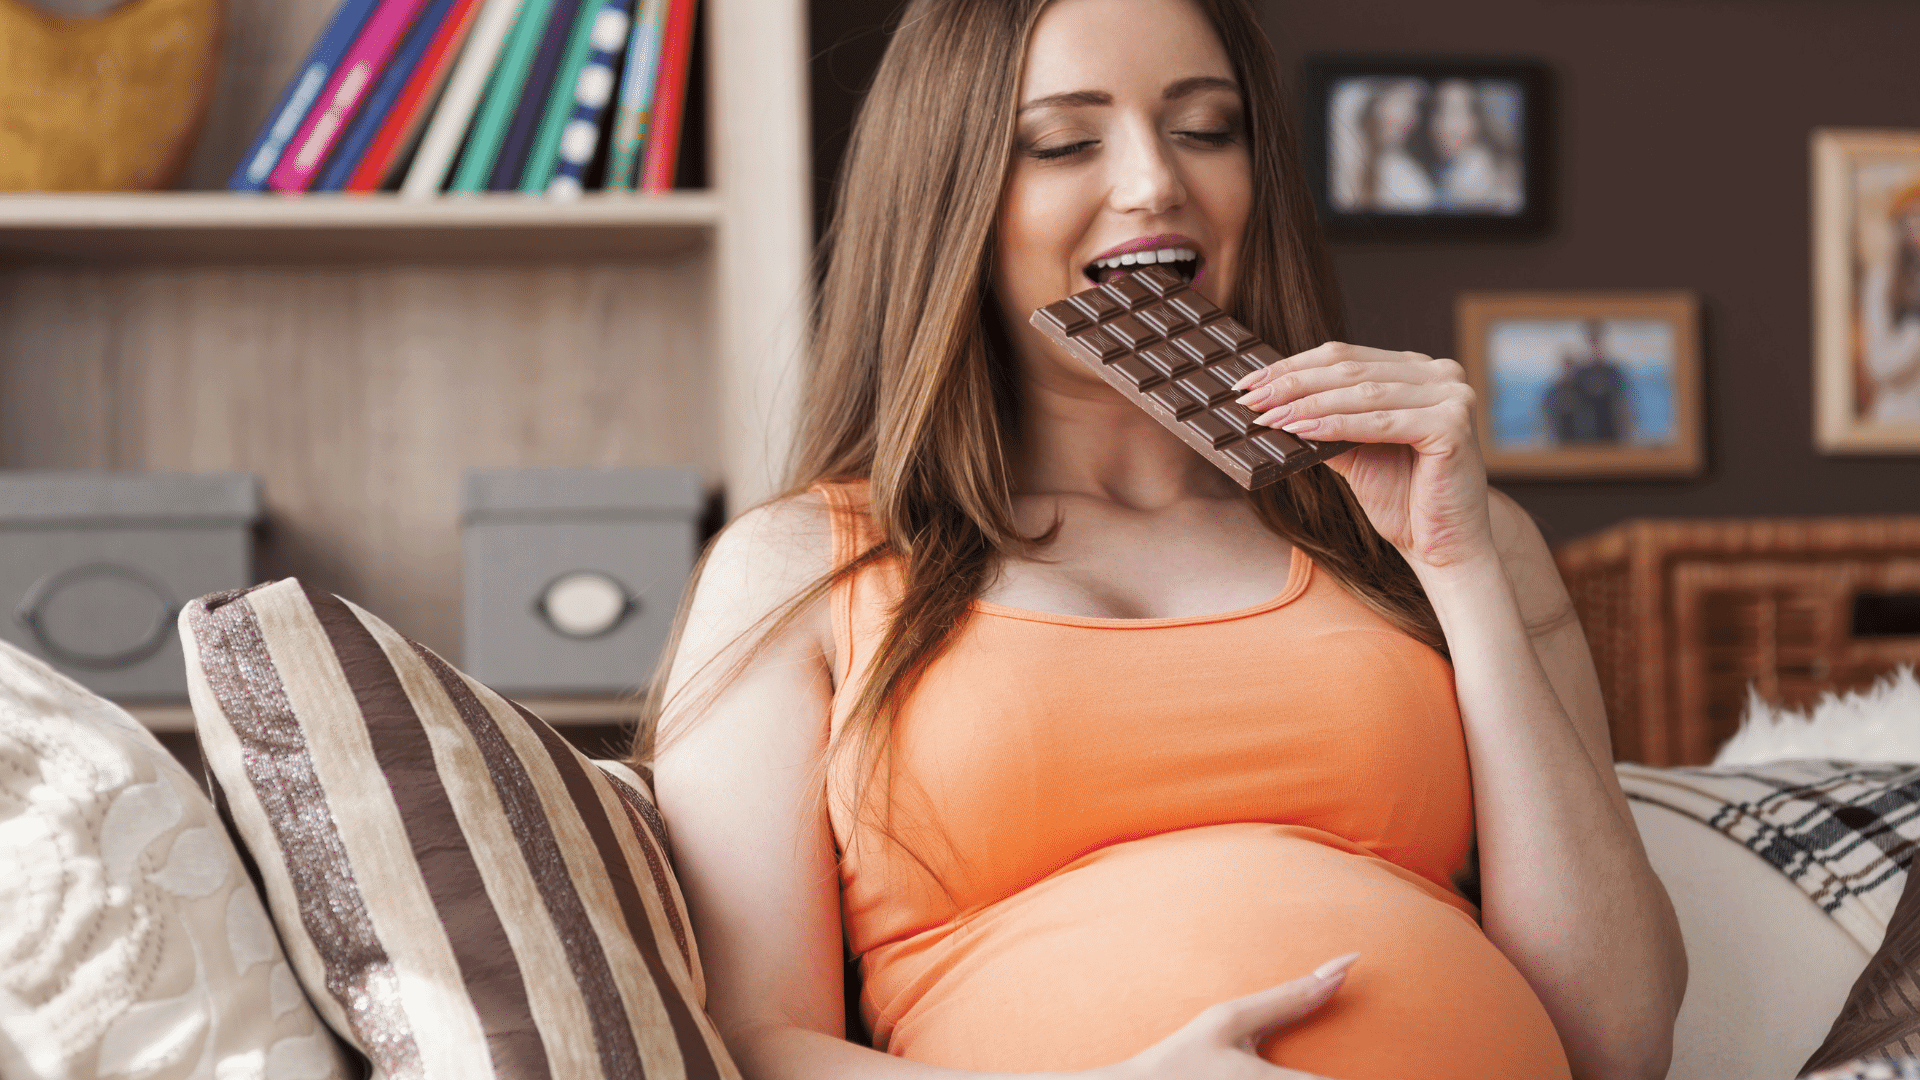 Pregnant woman sitting on sofa eating chocolate